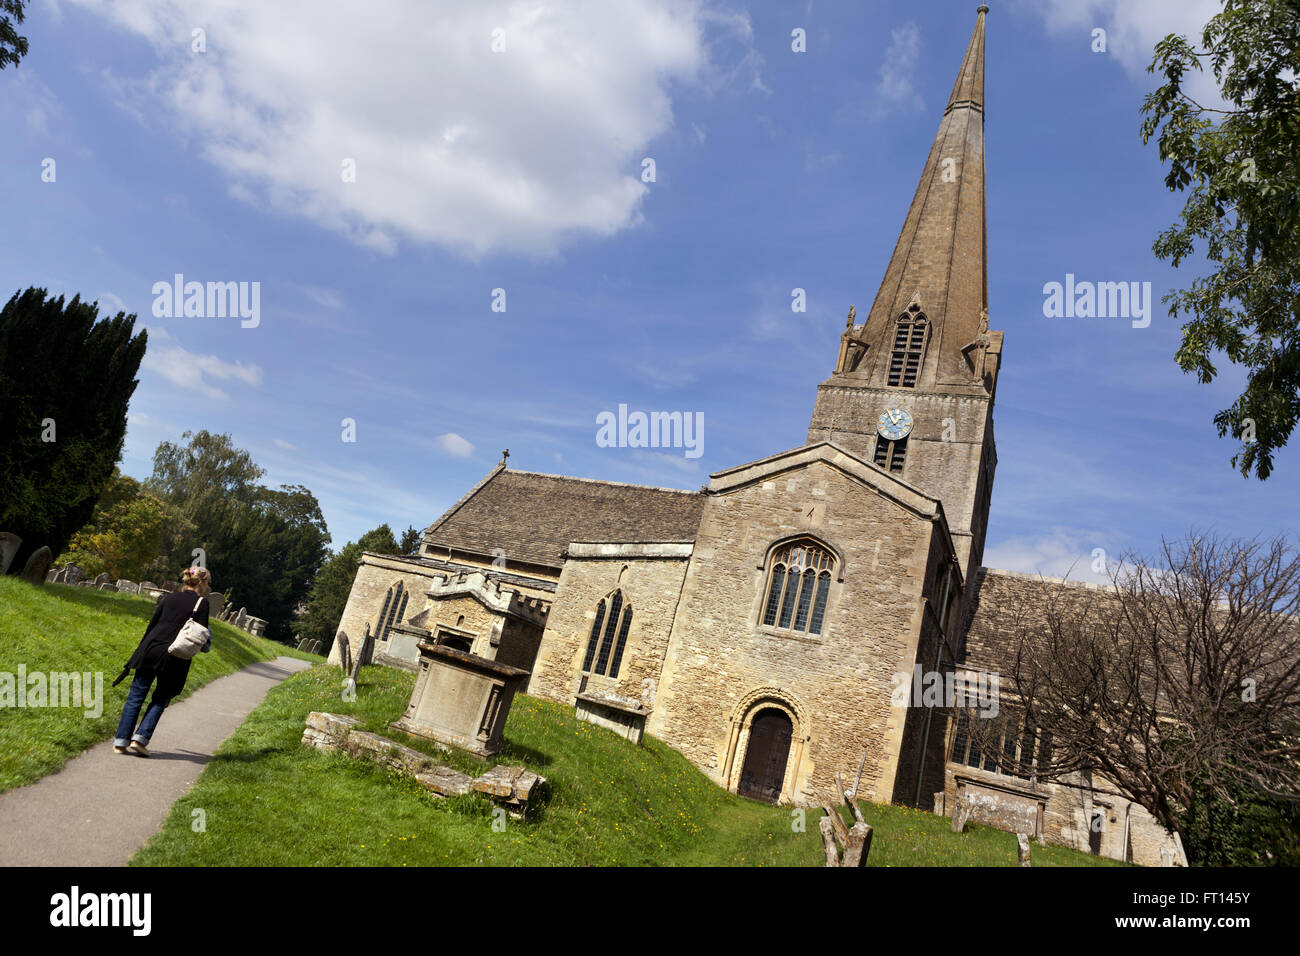 St Mary's C of E Church, from TVs Downton Abbey, Bampton, Oxfordshire, England, United Kingdom Stock Photo